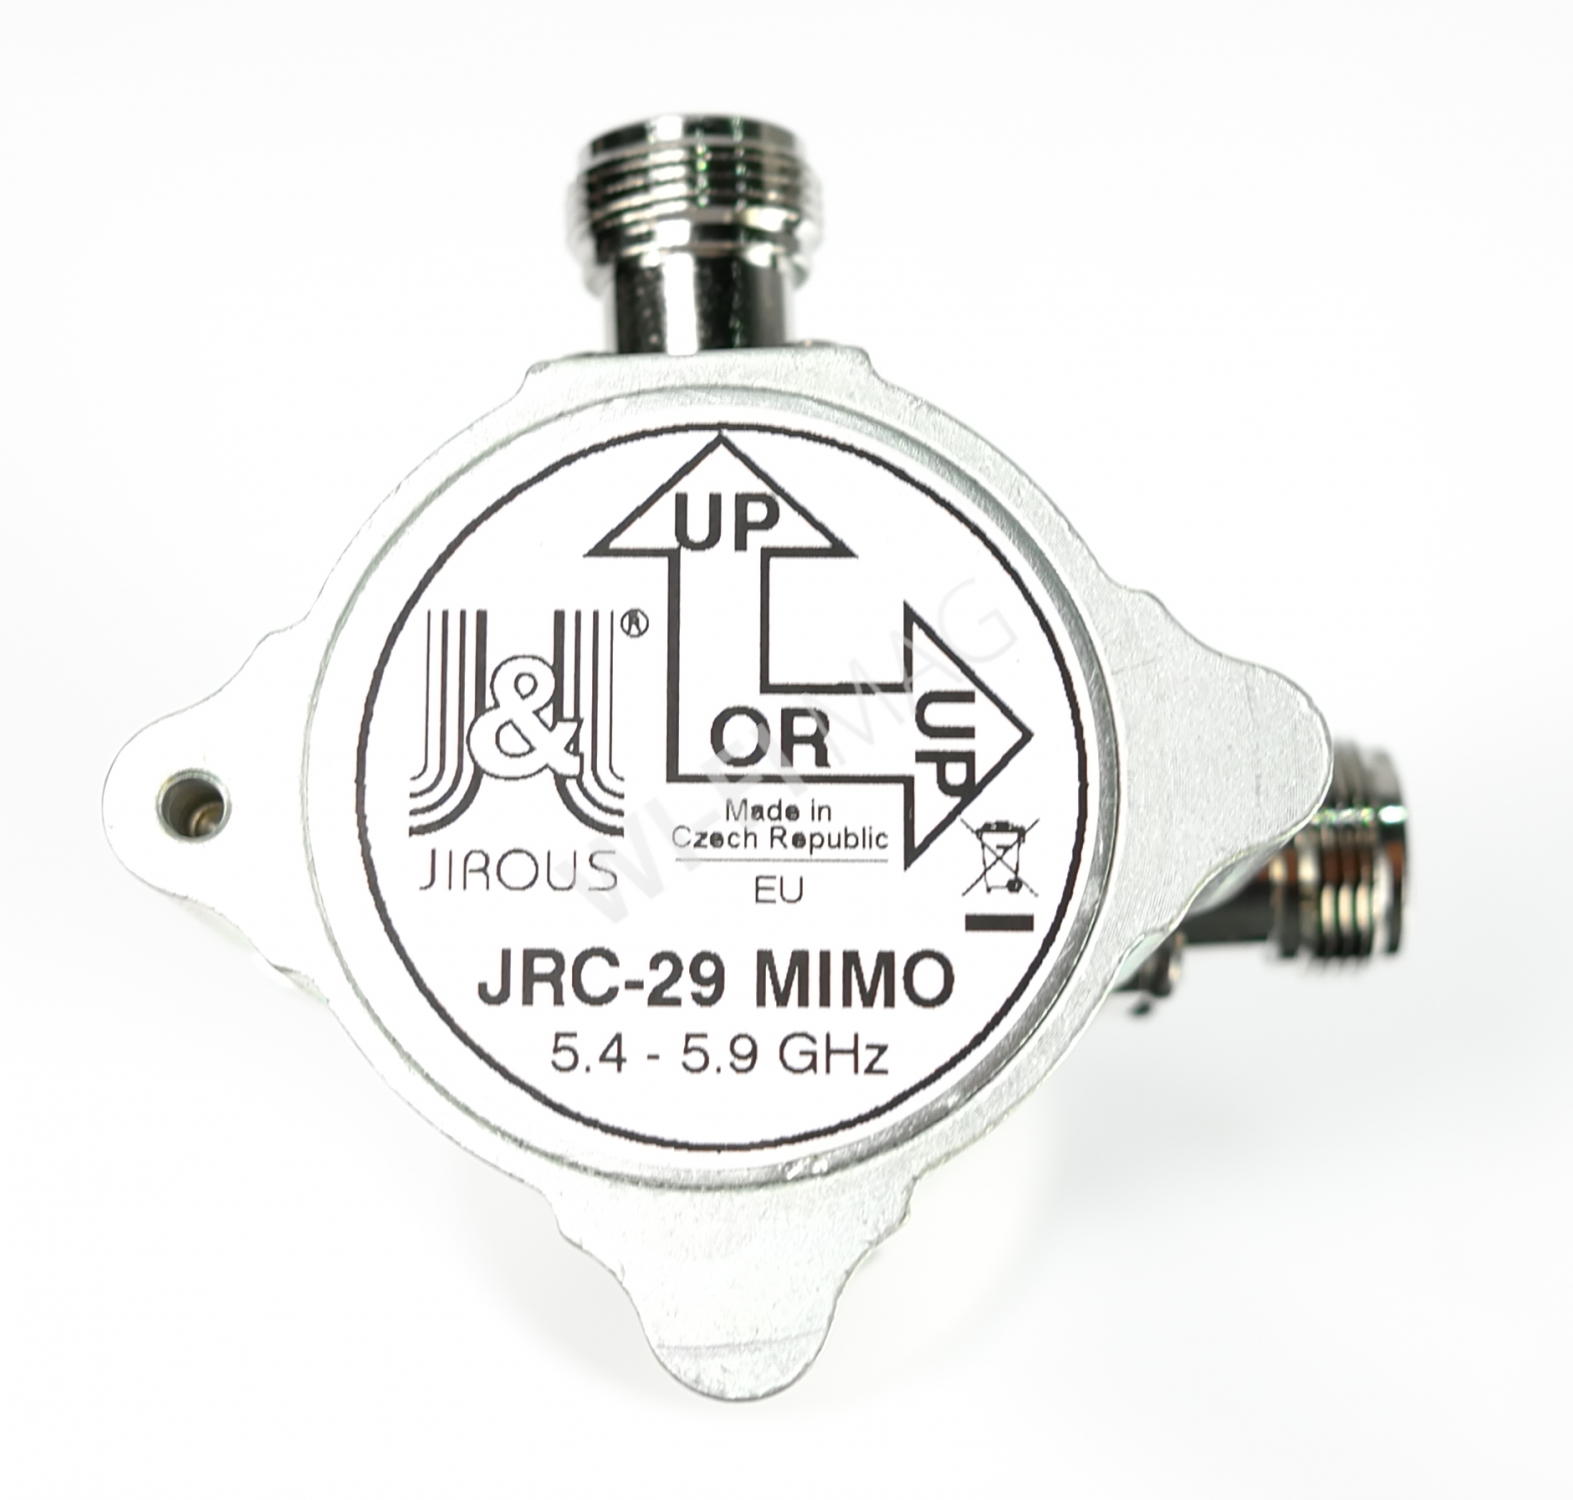 Jirous Upgrade kit JRC-29 MIMO